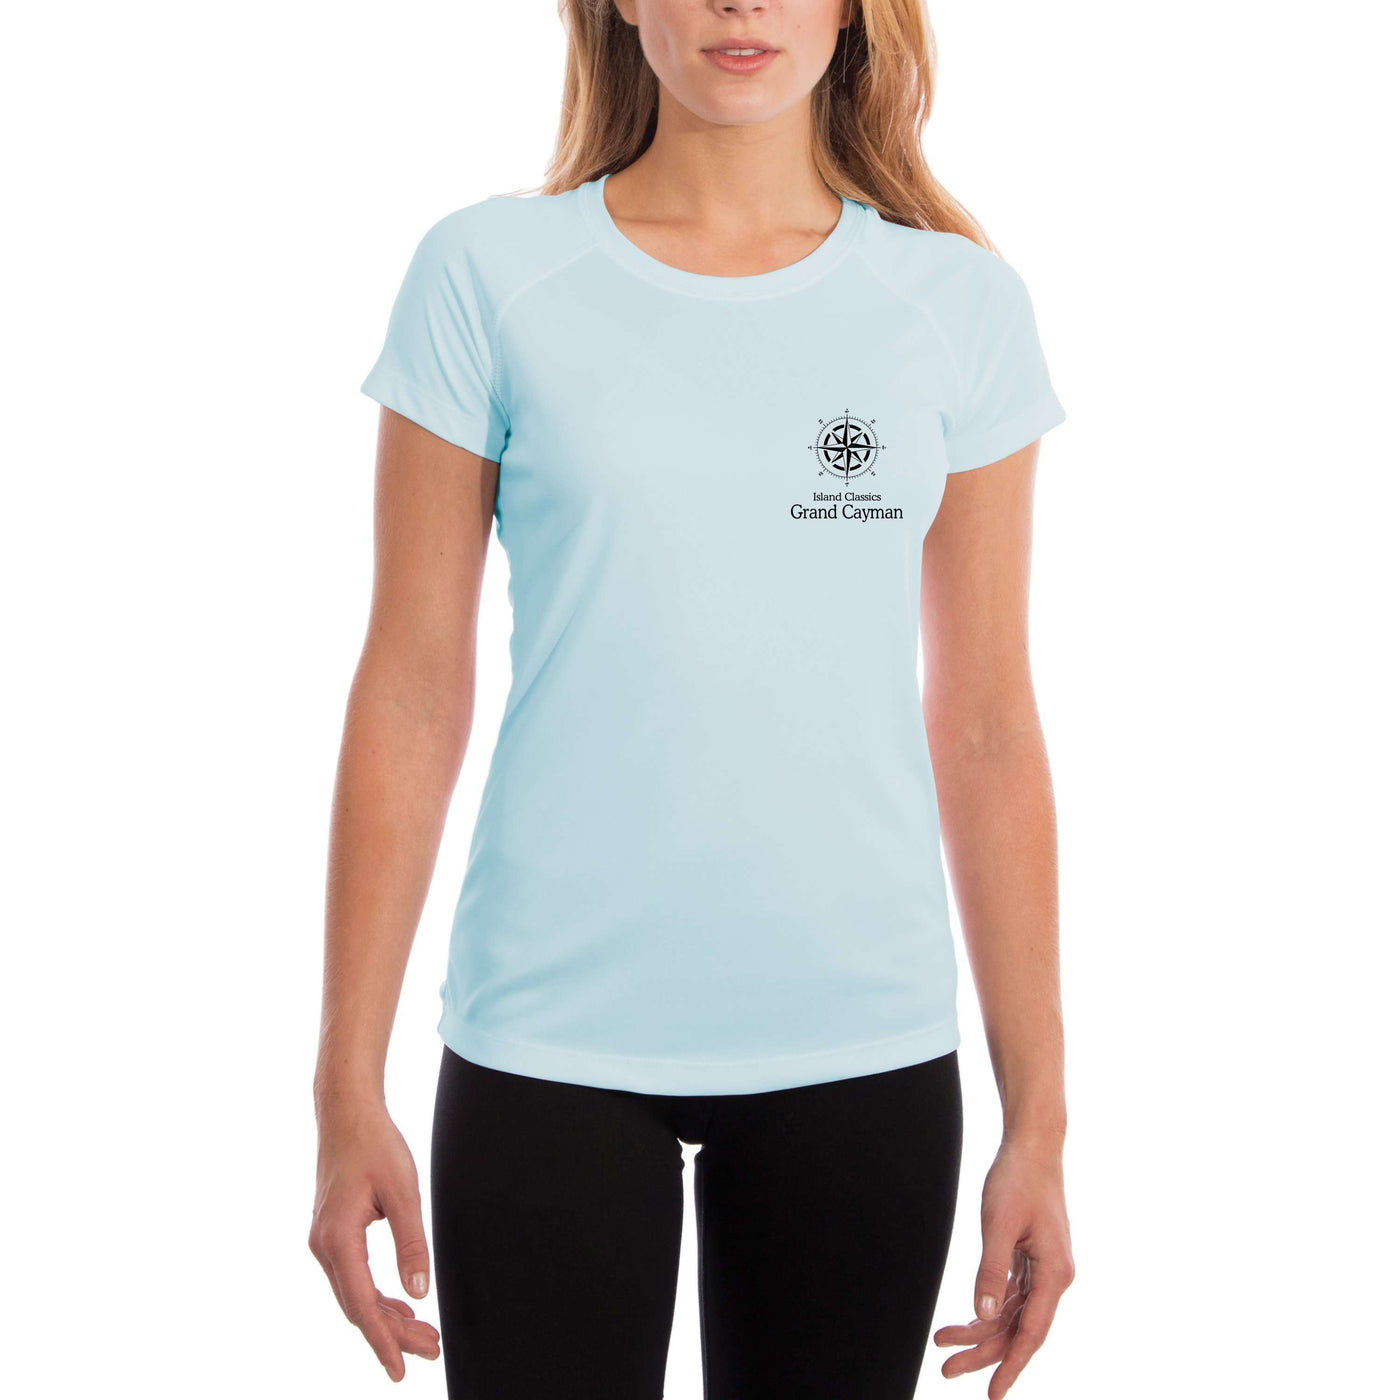 Island Classics Grand Cayman Women's UPF 50+ UV Sun Protection Short Sleeve T-shirt